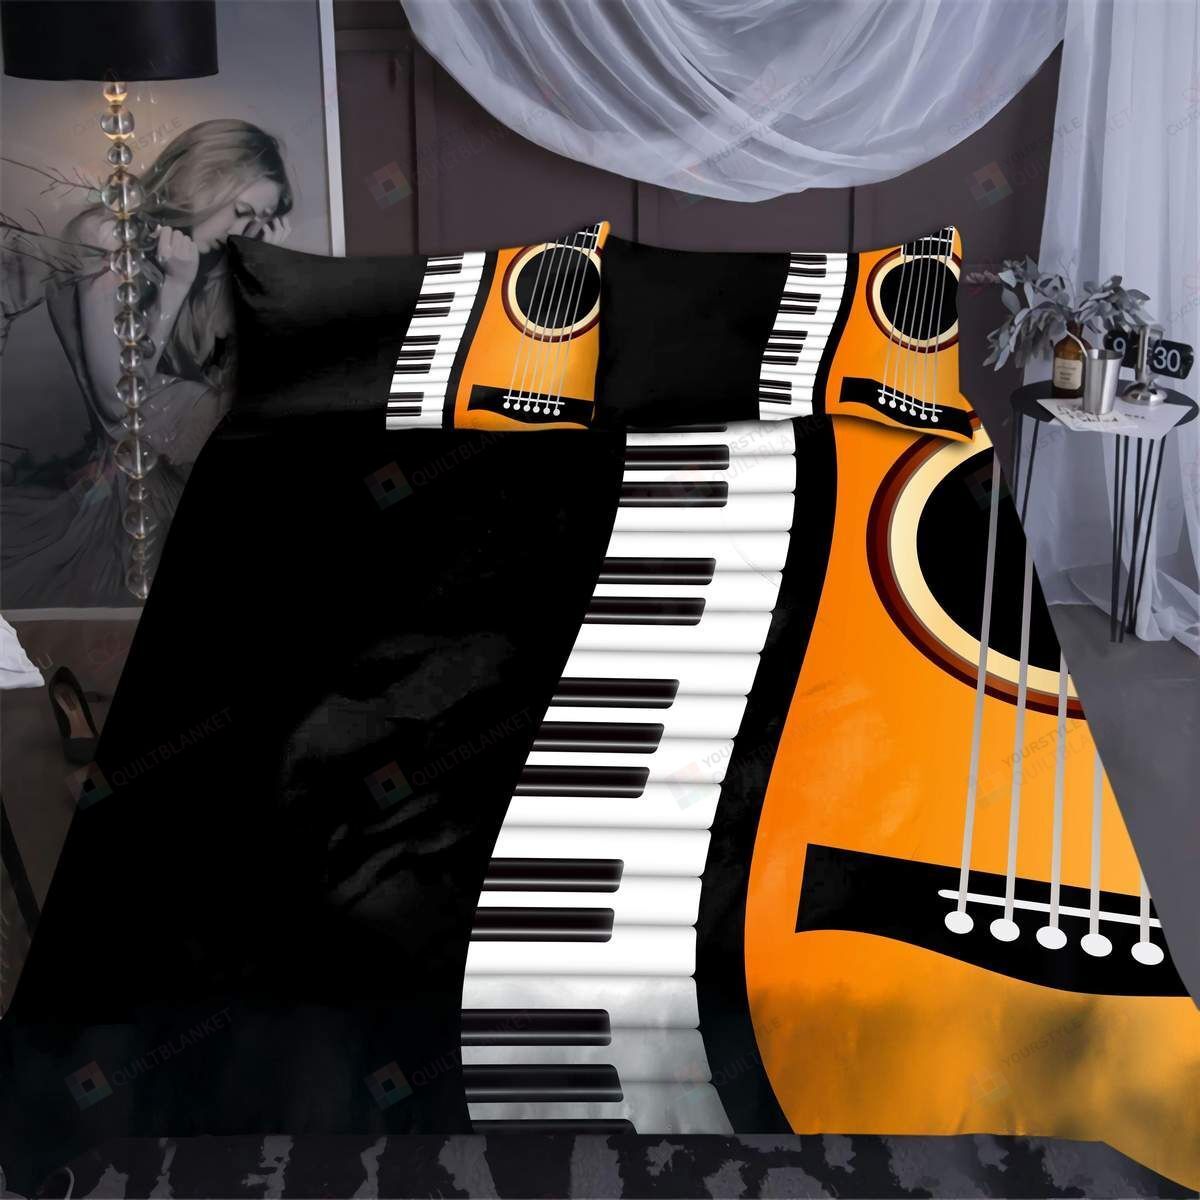 Guitar And Piano Duvet Cover Bedding Set